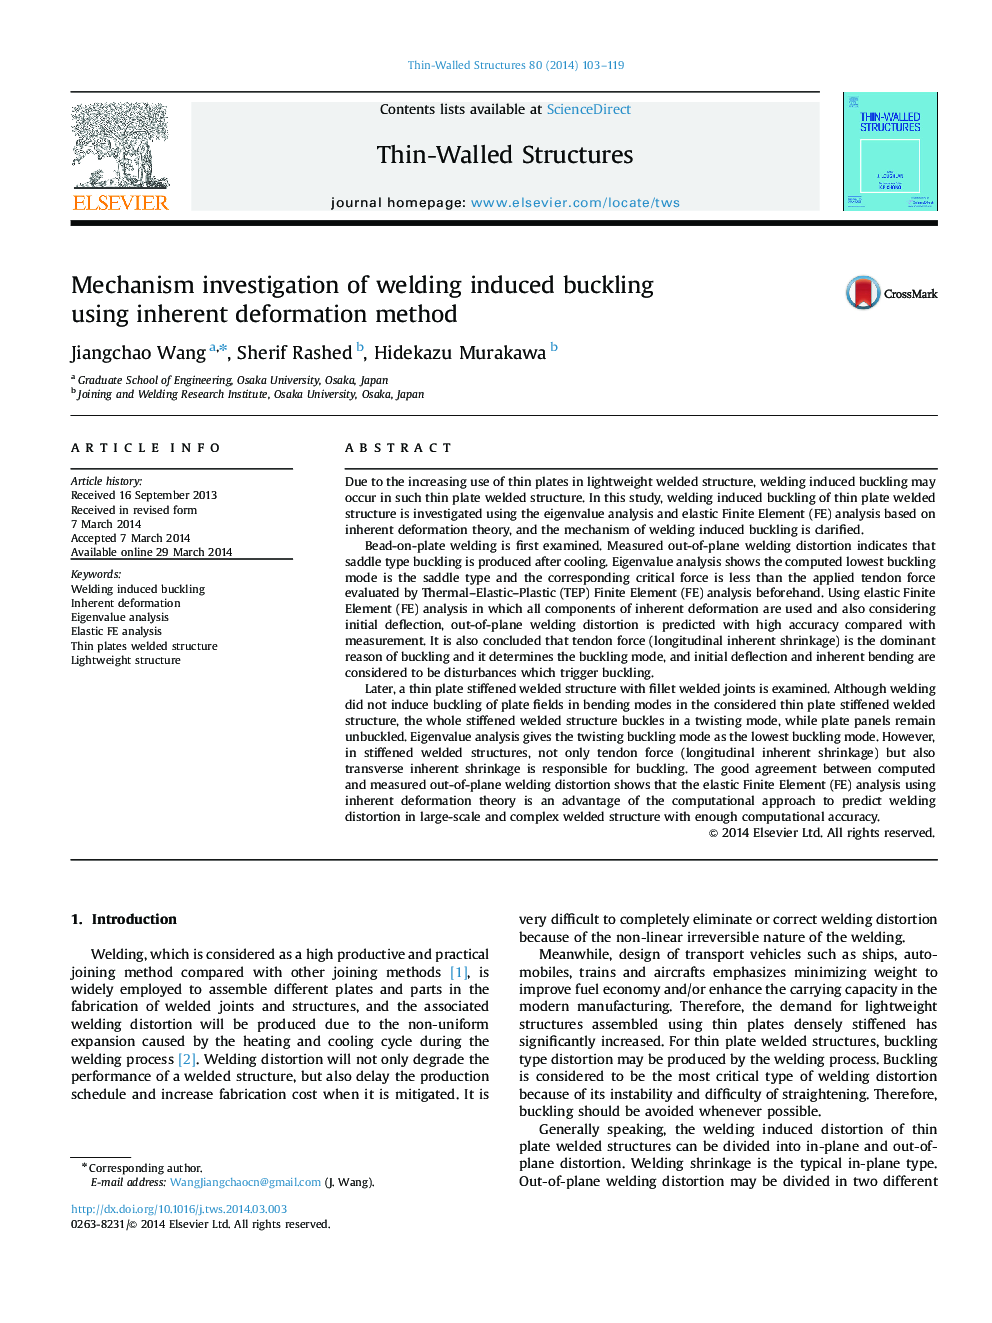 Mechanism investigation of welding induced buckling using inherent deformation method